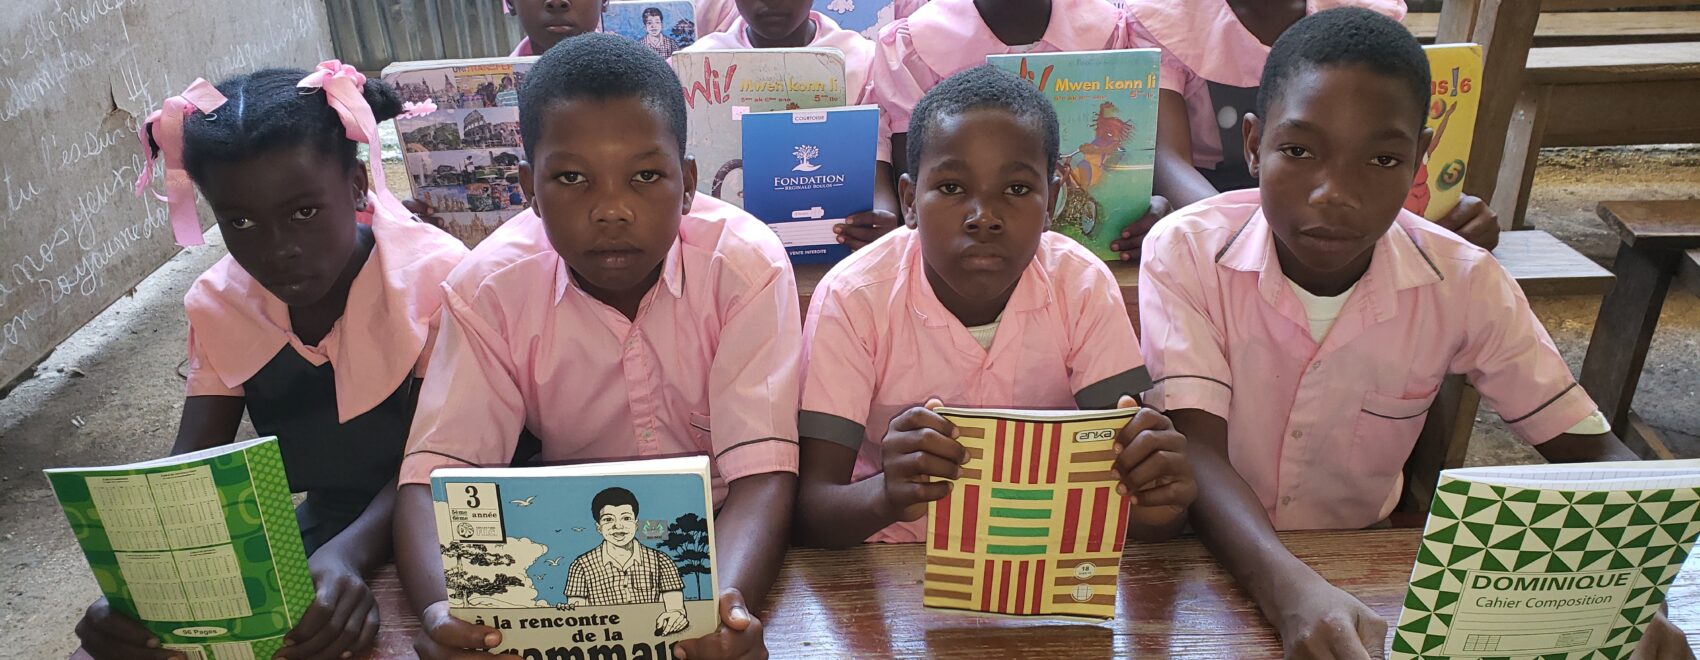 Haitian Children with Books